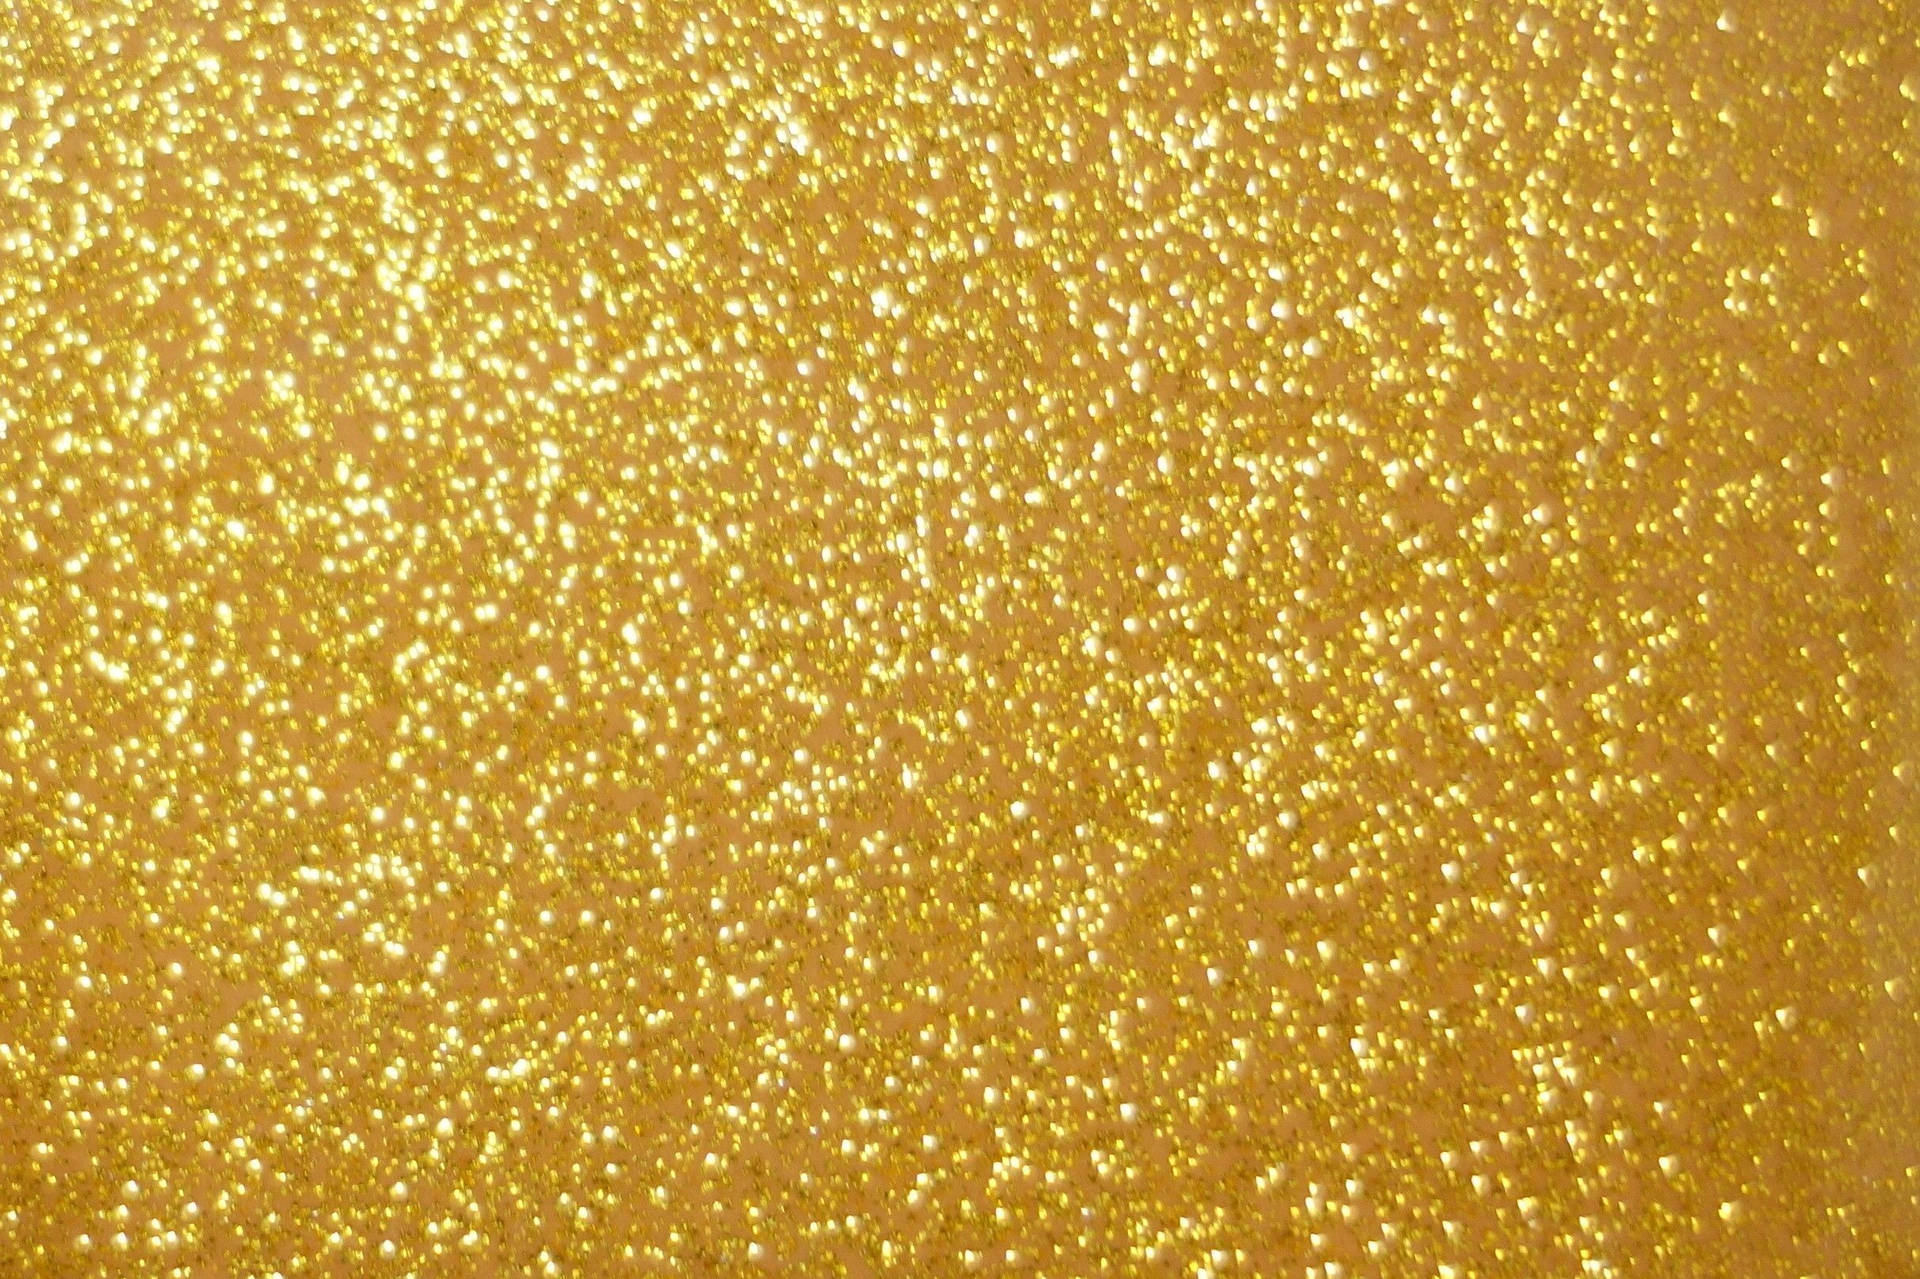 "Shine bright like gold." Wallpaper